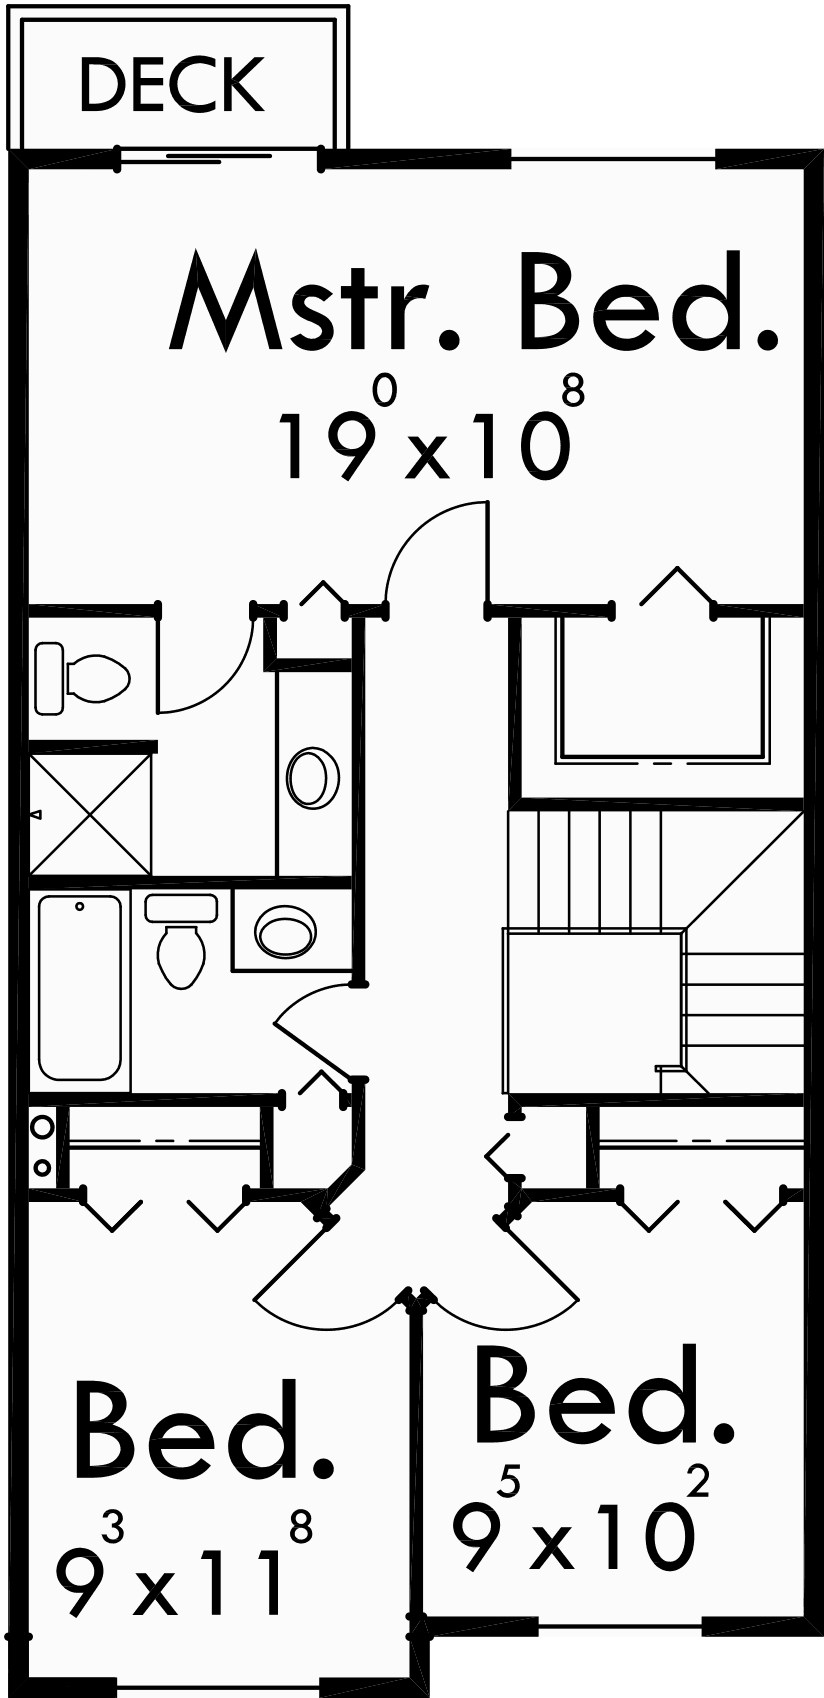 Upper Floor Plan for 9920 Narrow lot house plans, small lot house plans, 20 ft wide house plans, affordable house plans, 9920